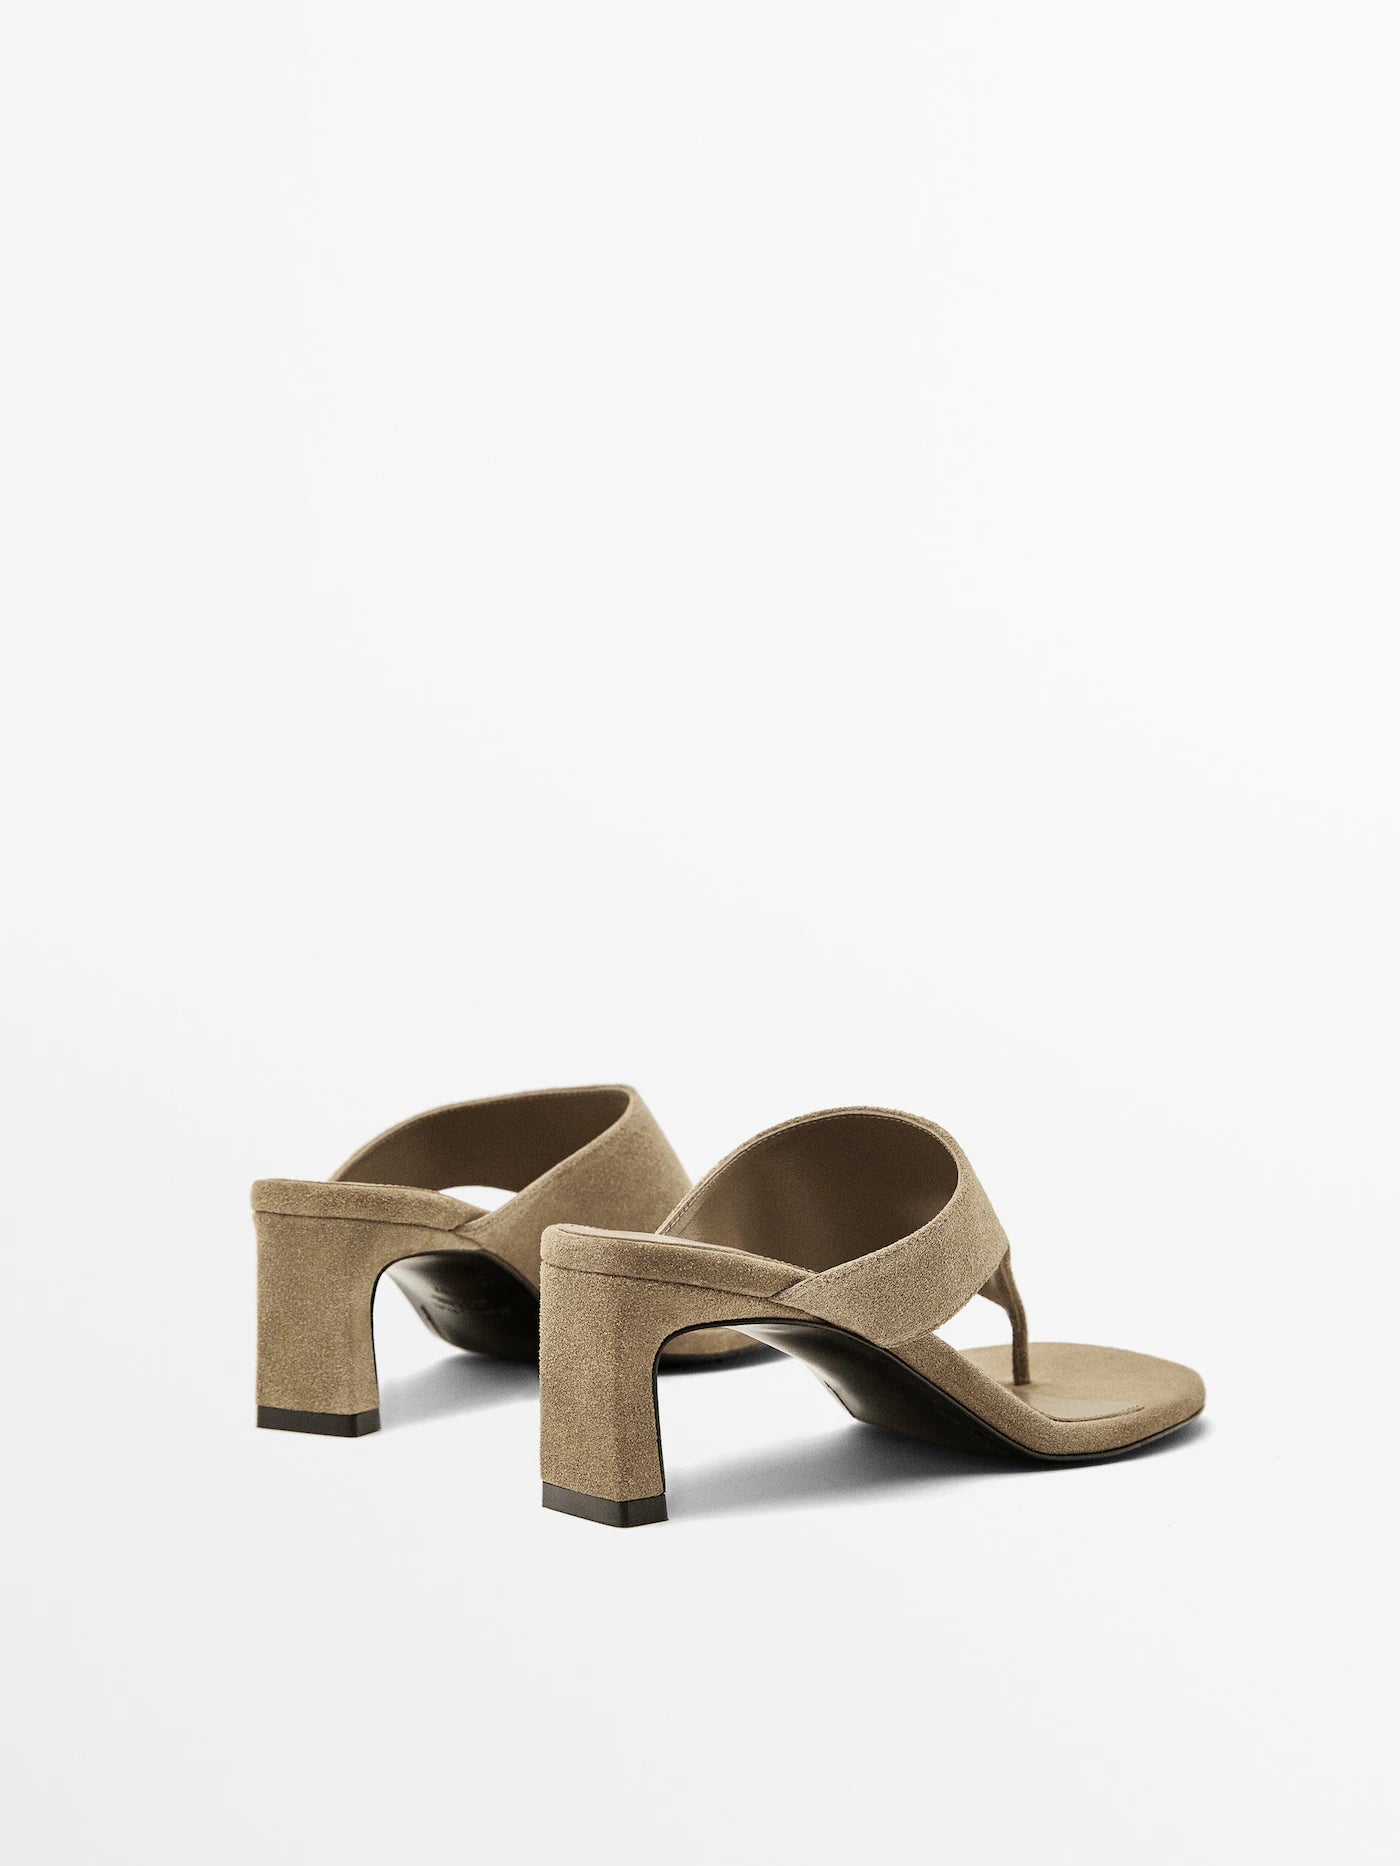 Split leather heeled sandals